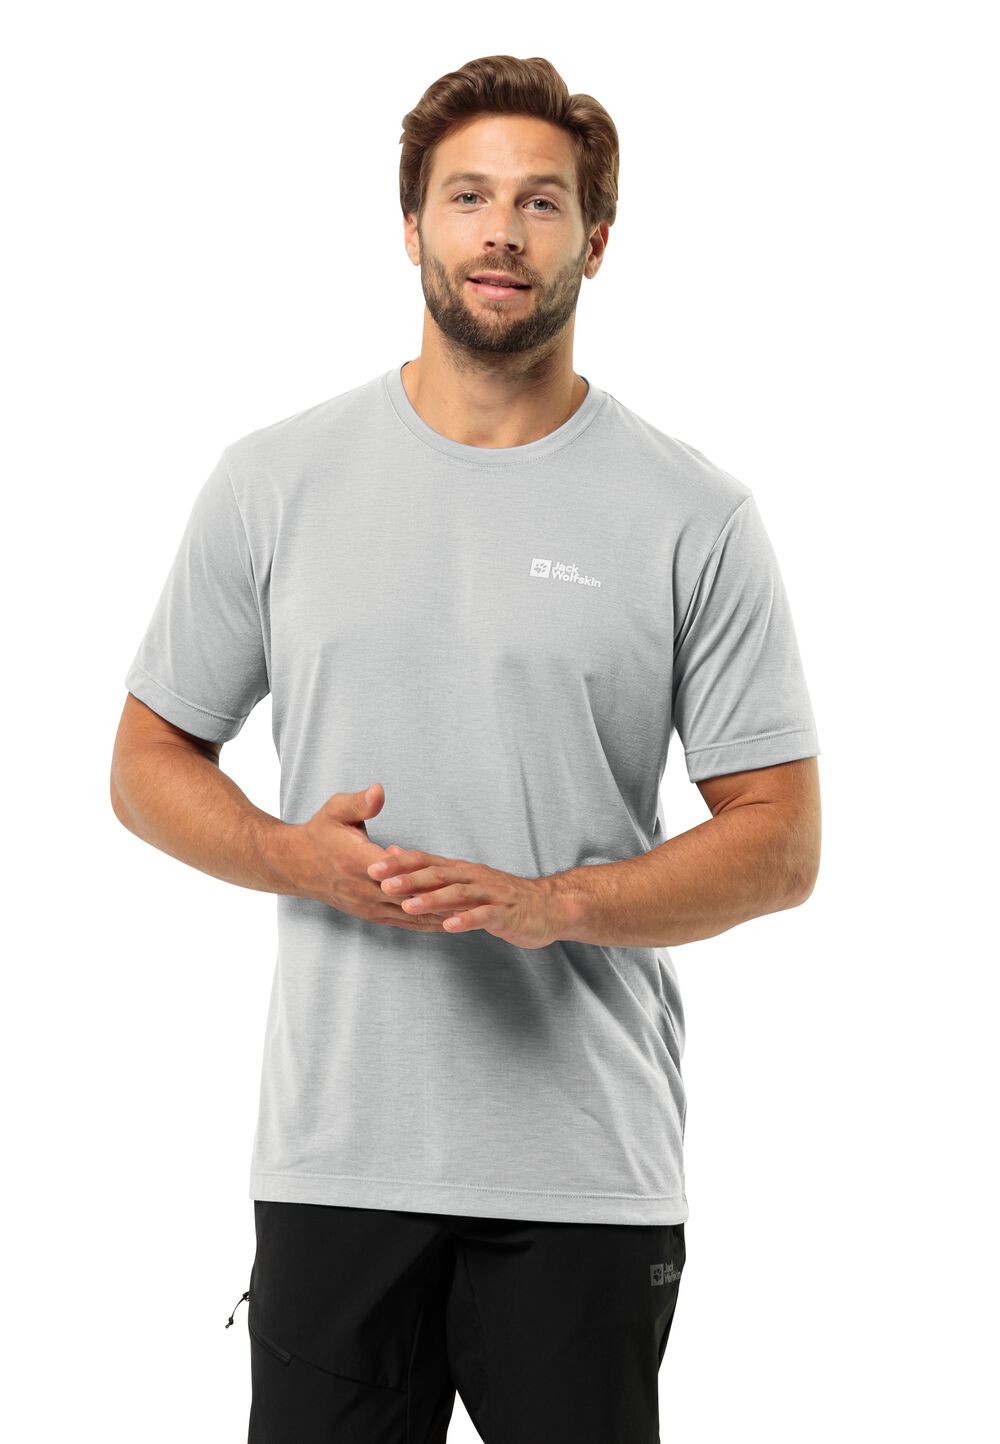 Jack Wolfskin Vonnan S S T-Shirt Men Functioneel shirt Heren S grijs cool grey